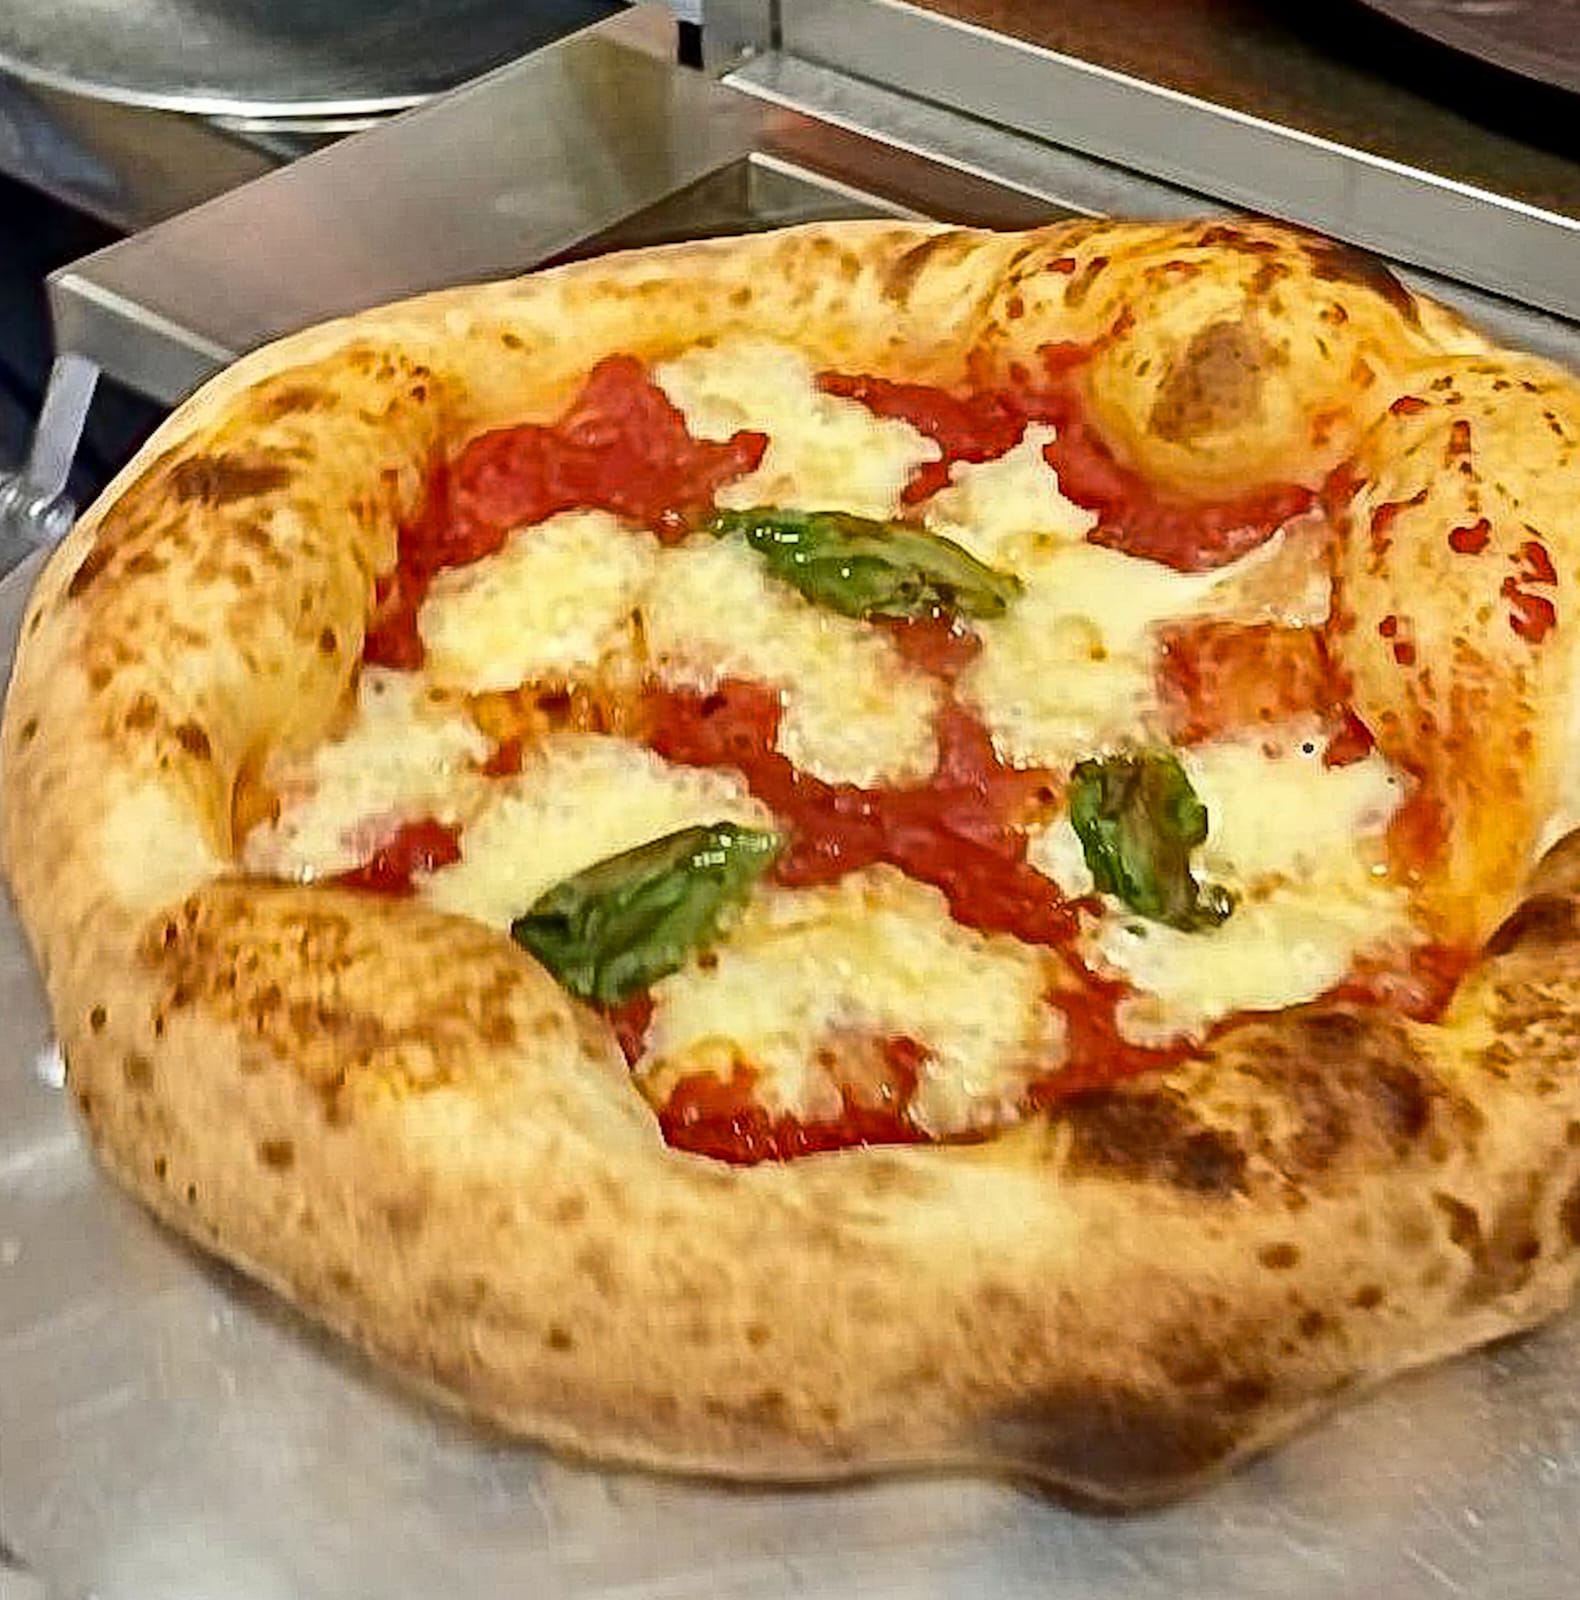 Osteria da Casa inicia venda de pizzas napolitanas por delivery. A Osteria da Casa inicia venda de pizzas napolitanas de longa fermentação